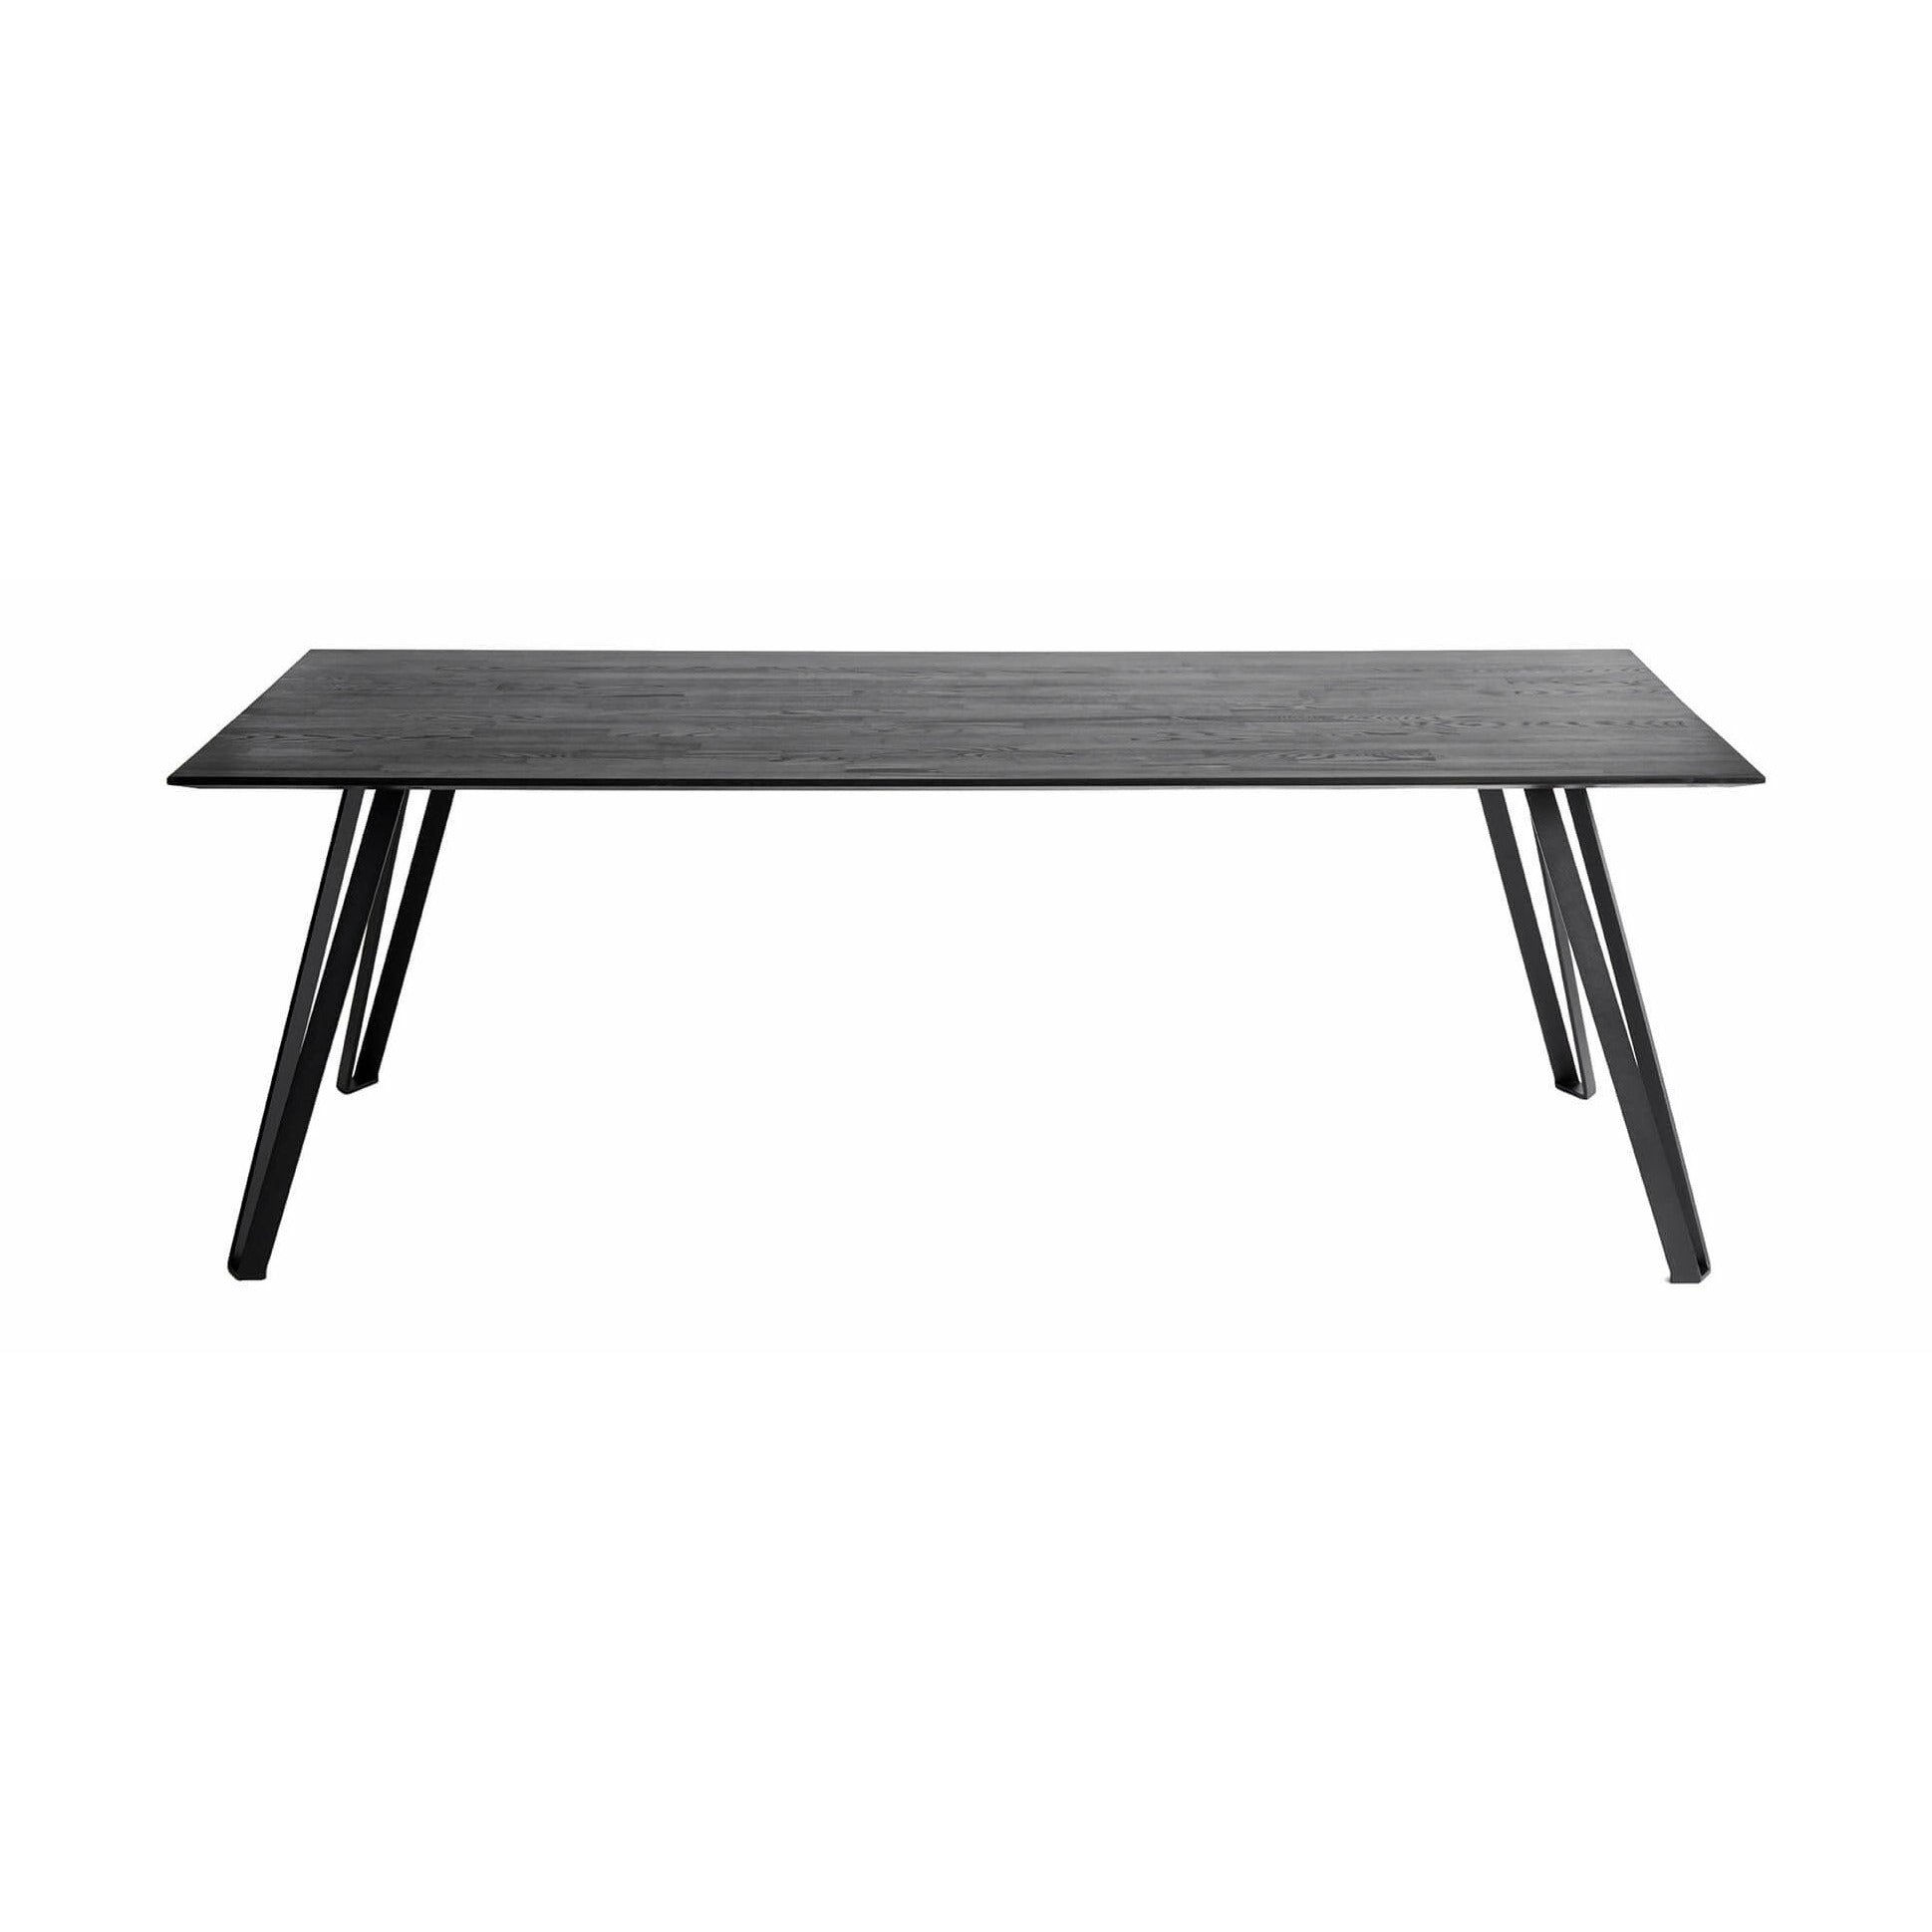 Muubs Space Jading Table Black, 220 cm